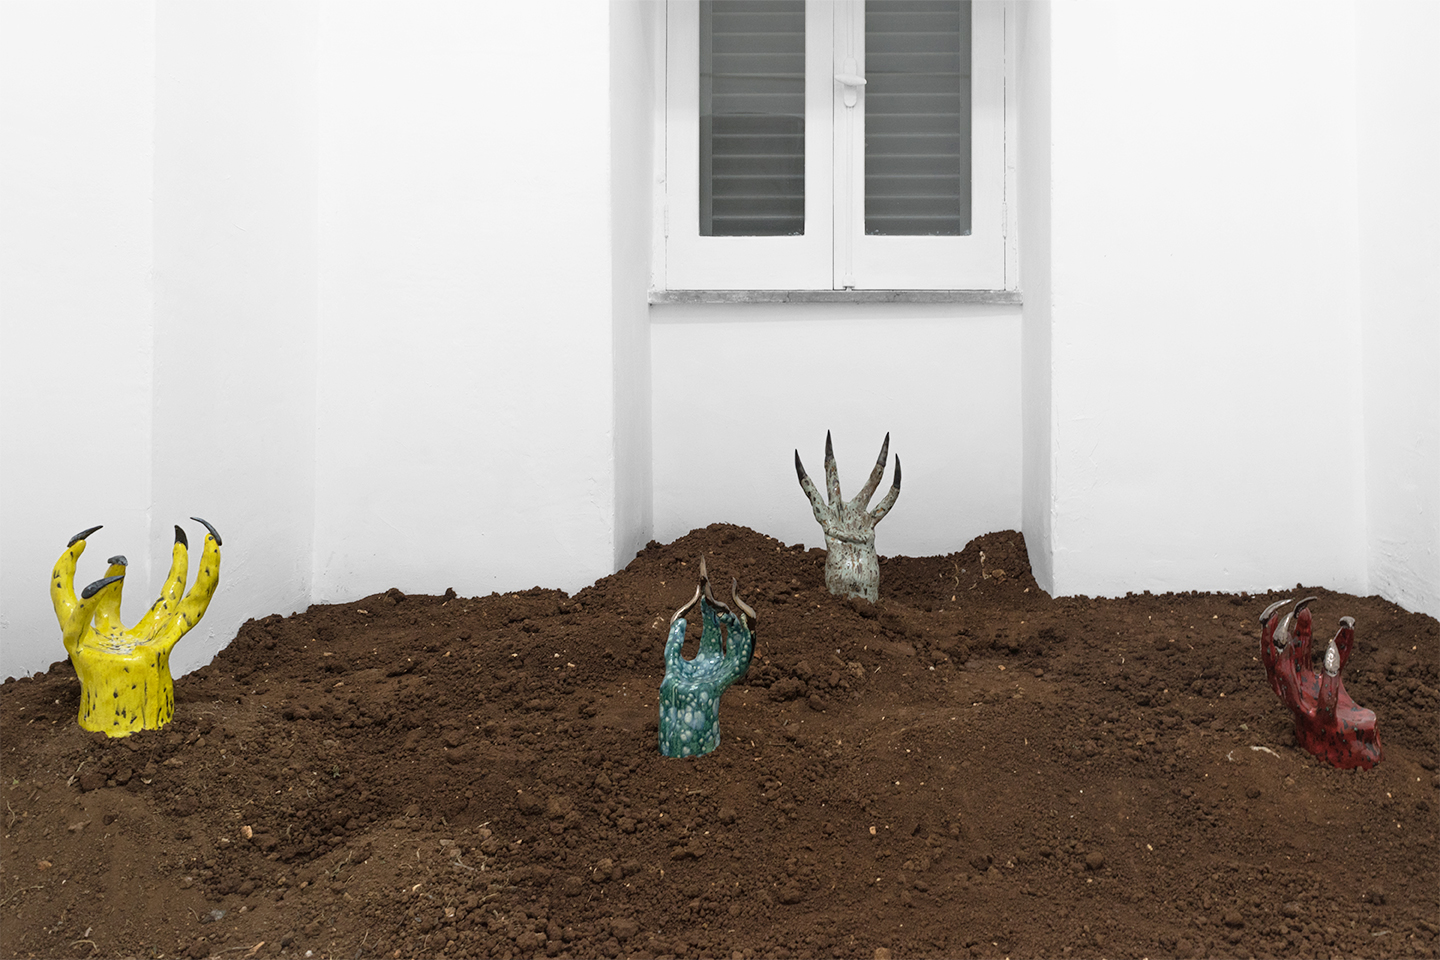 Naomi Gilon, Survivors, 2019, glazed ceramics on soil. 400x190x49 cm